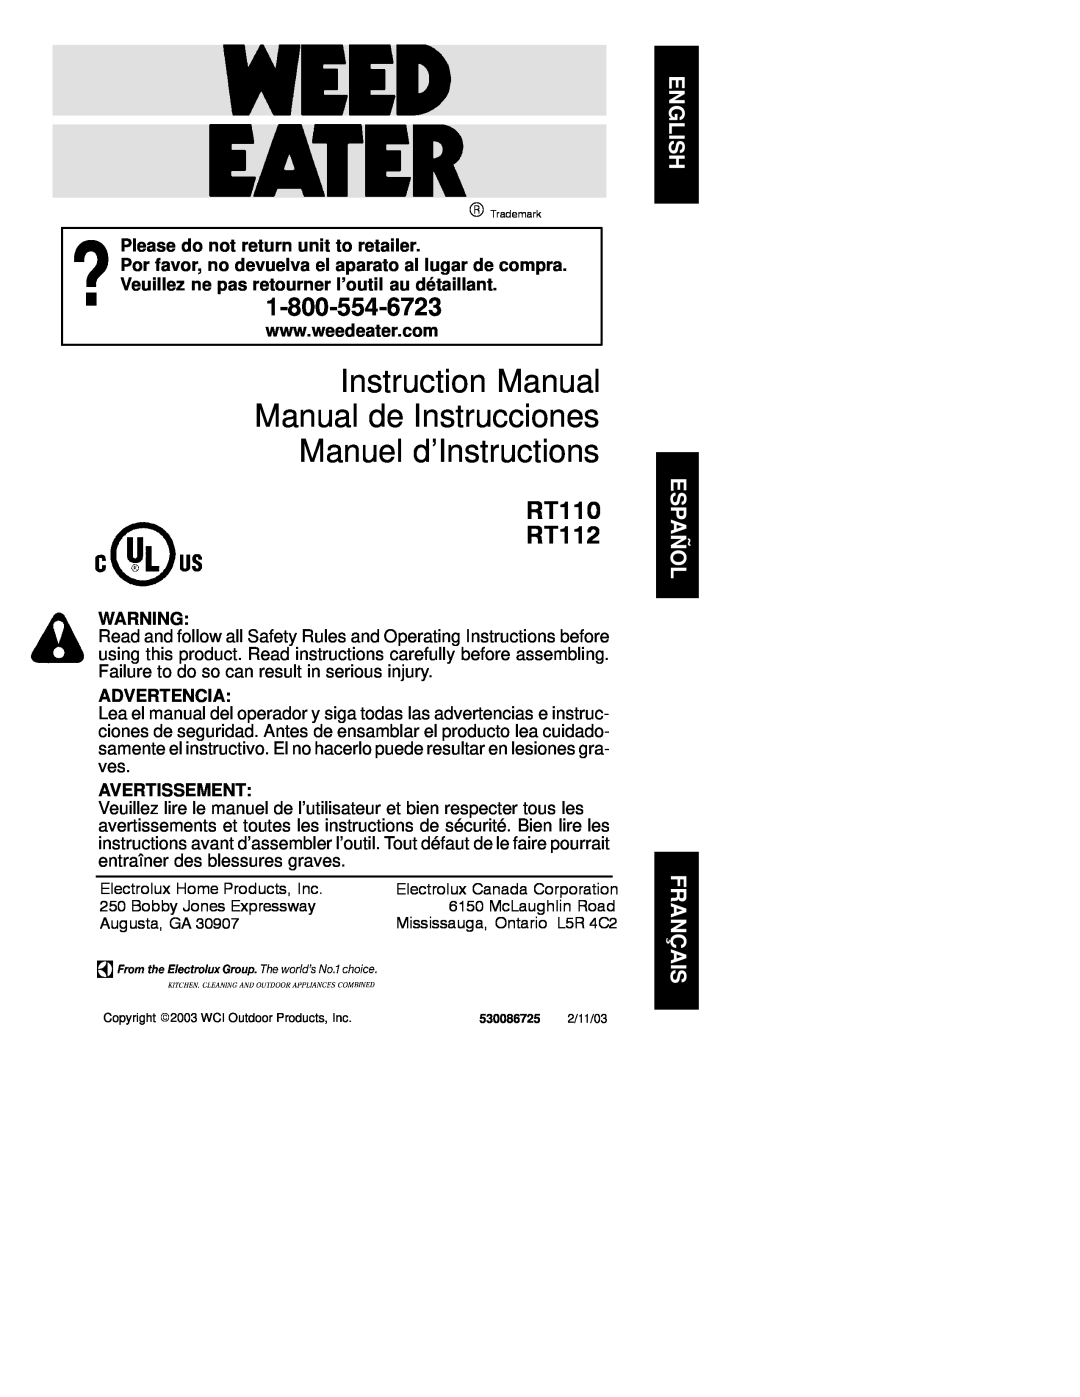 Weed Eater 530086725 instruction manual Please do not return unit to retailer, Advertencia, Avertissement, RT110 RT112 